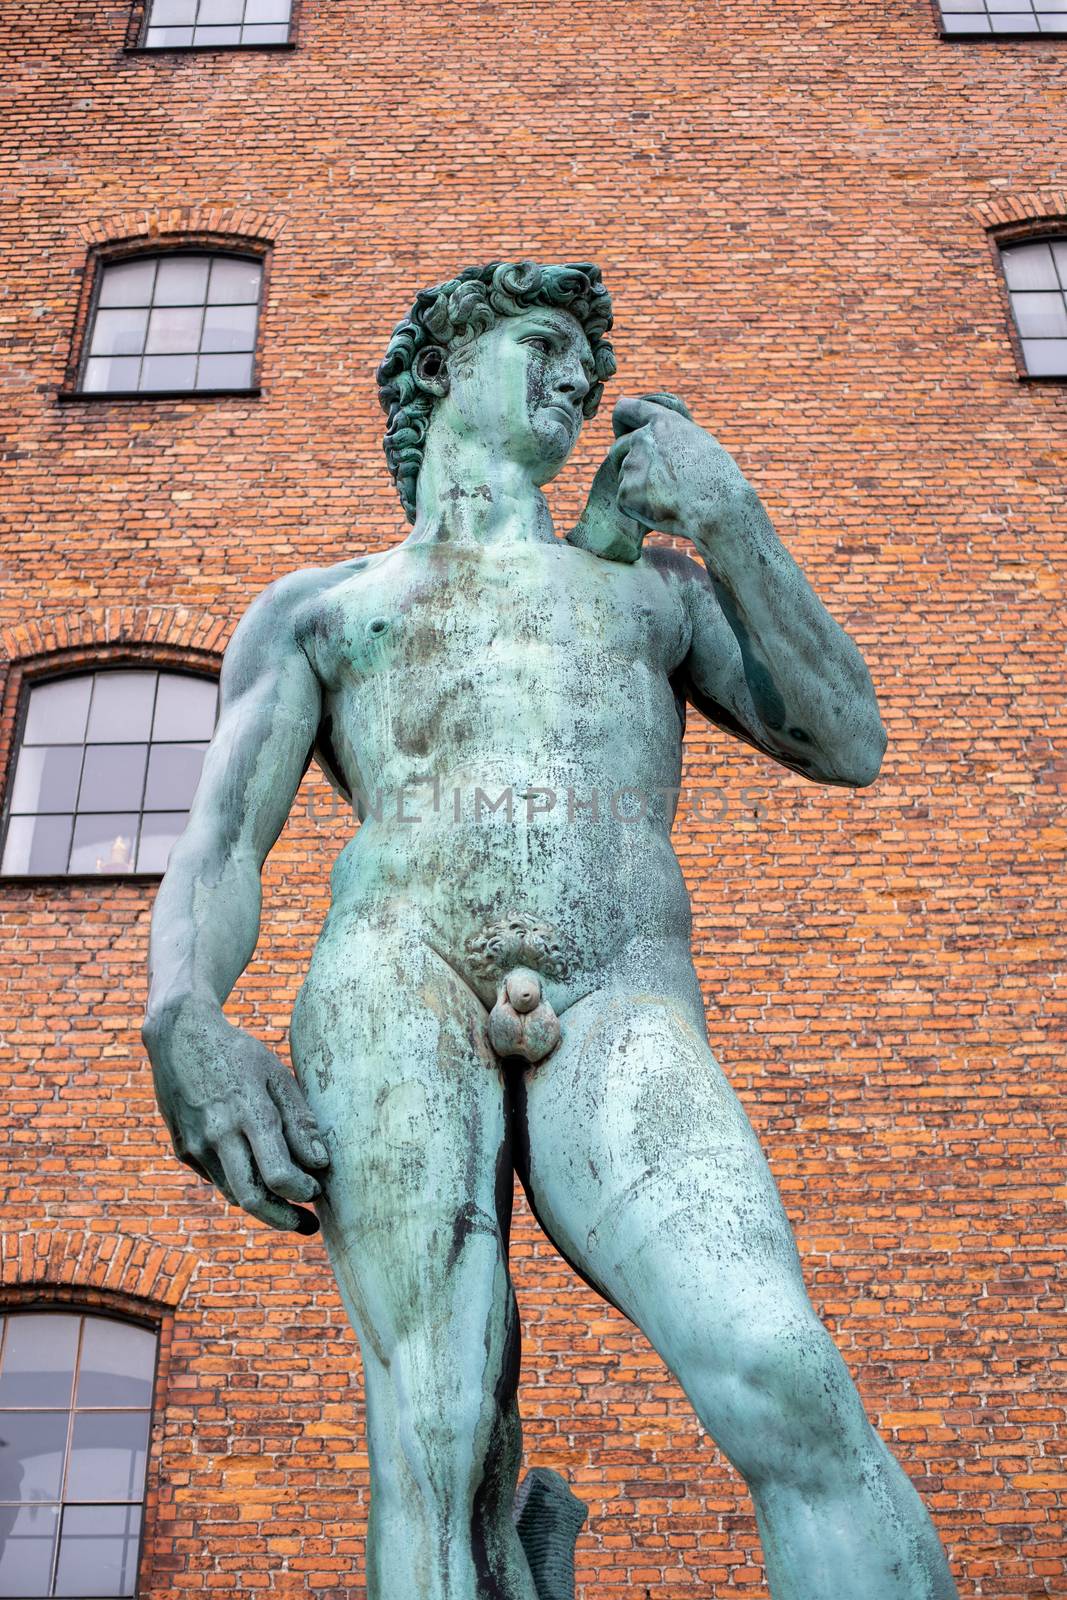 David Statue in Copenhagen, Denmark by oliverfoerstner